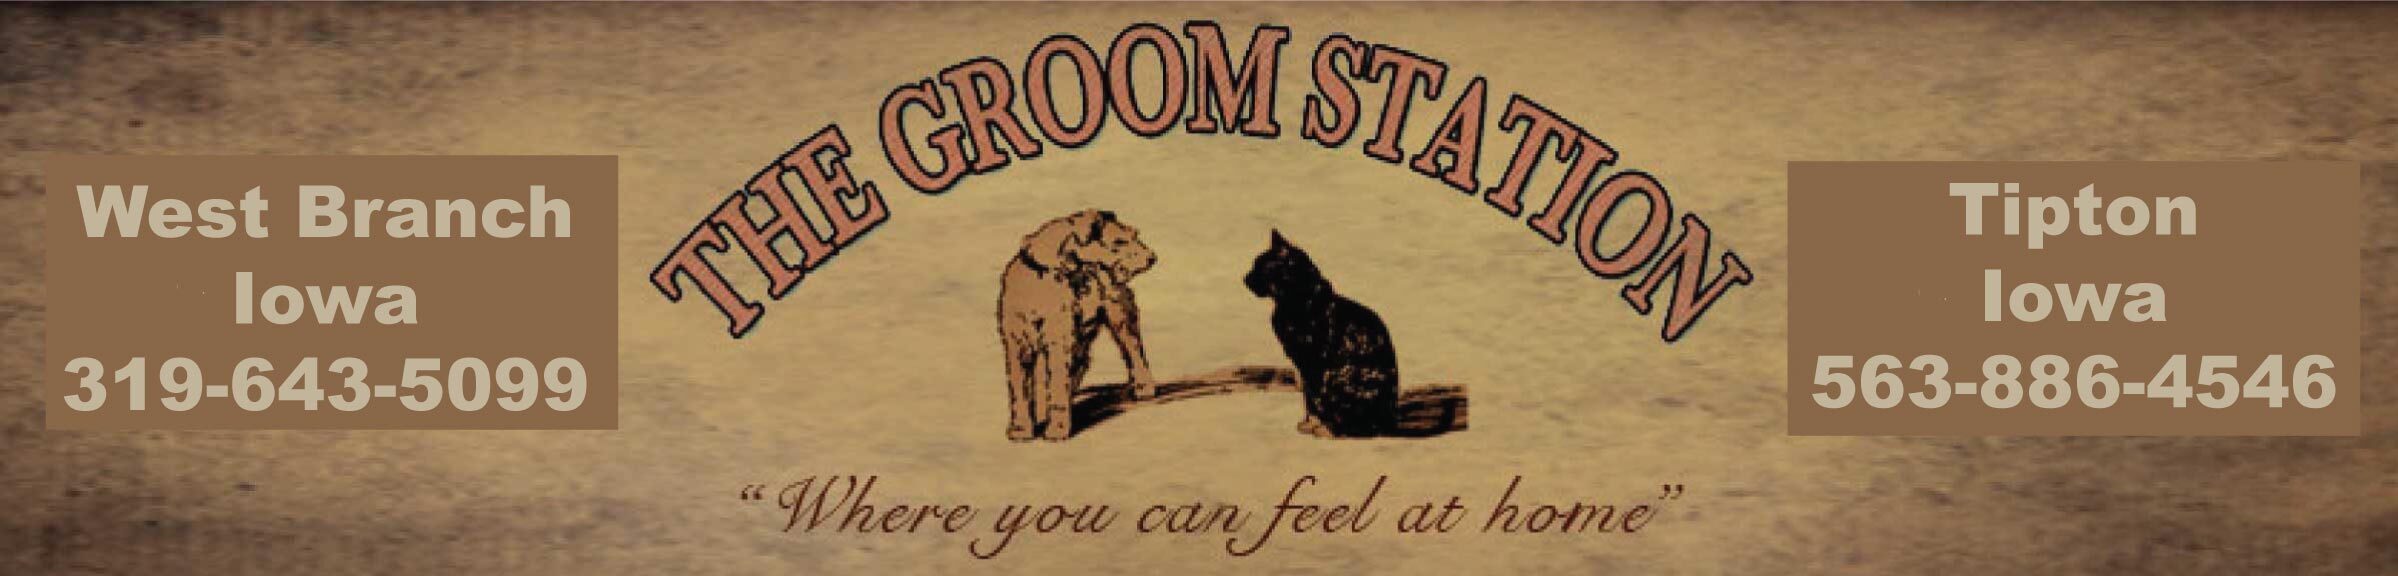 The Groom Station – A Full Service Pet Salon